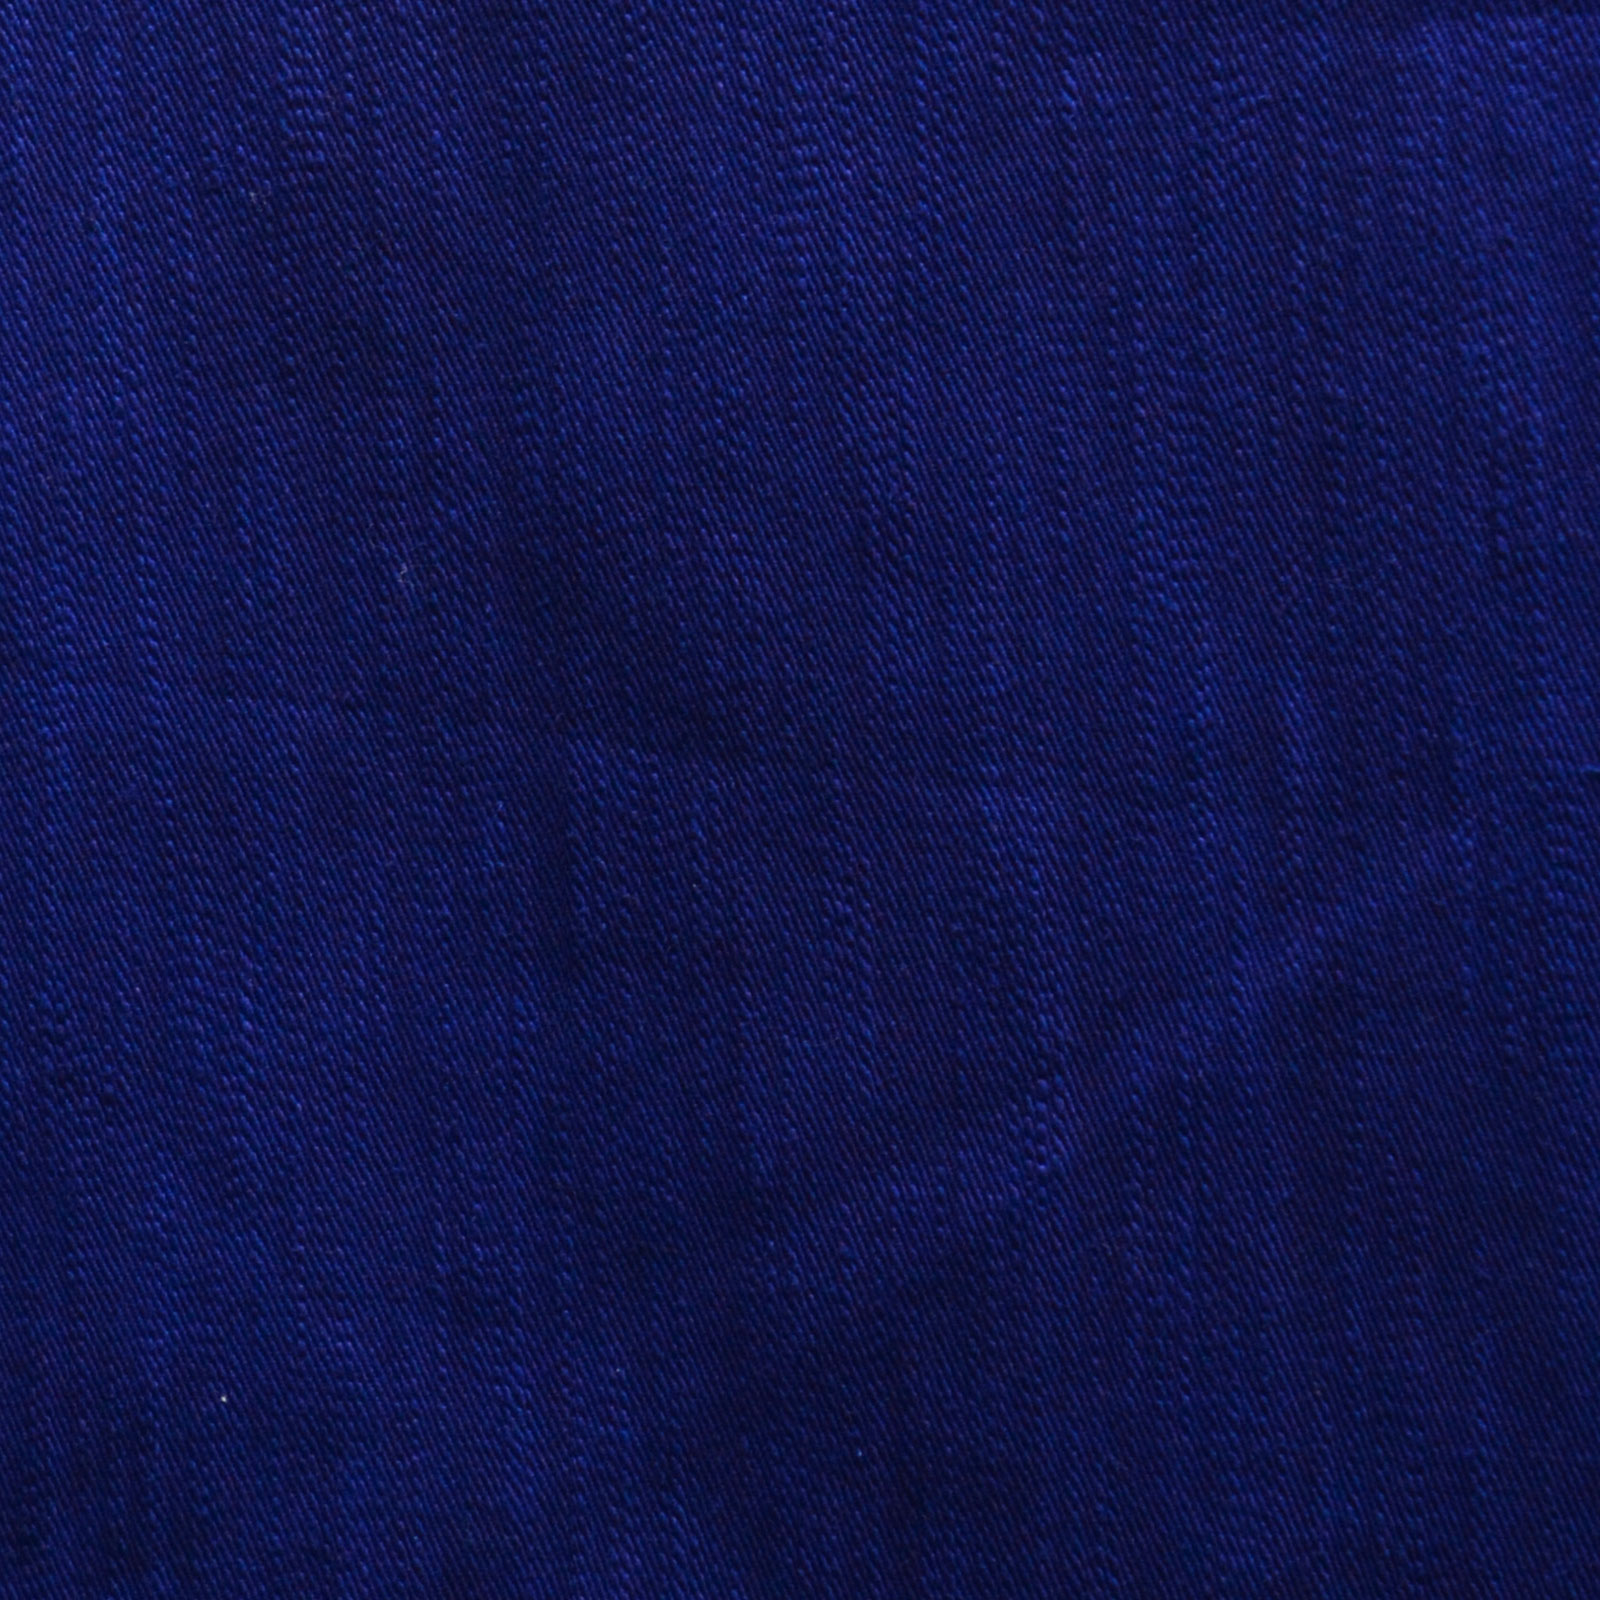 Medium Weight Khadi Selvedge Denim - Fabric Dyed - 10x10 - Space Blue - Natural indigo